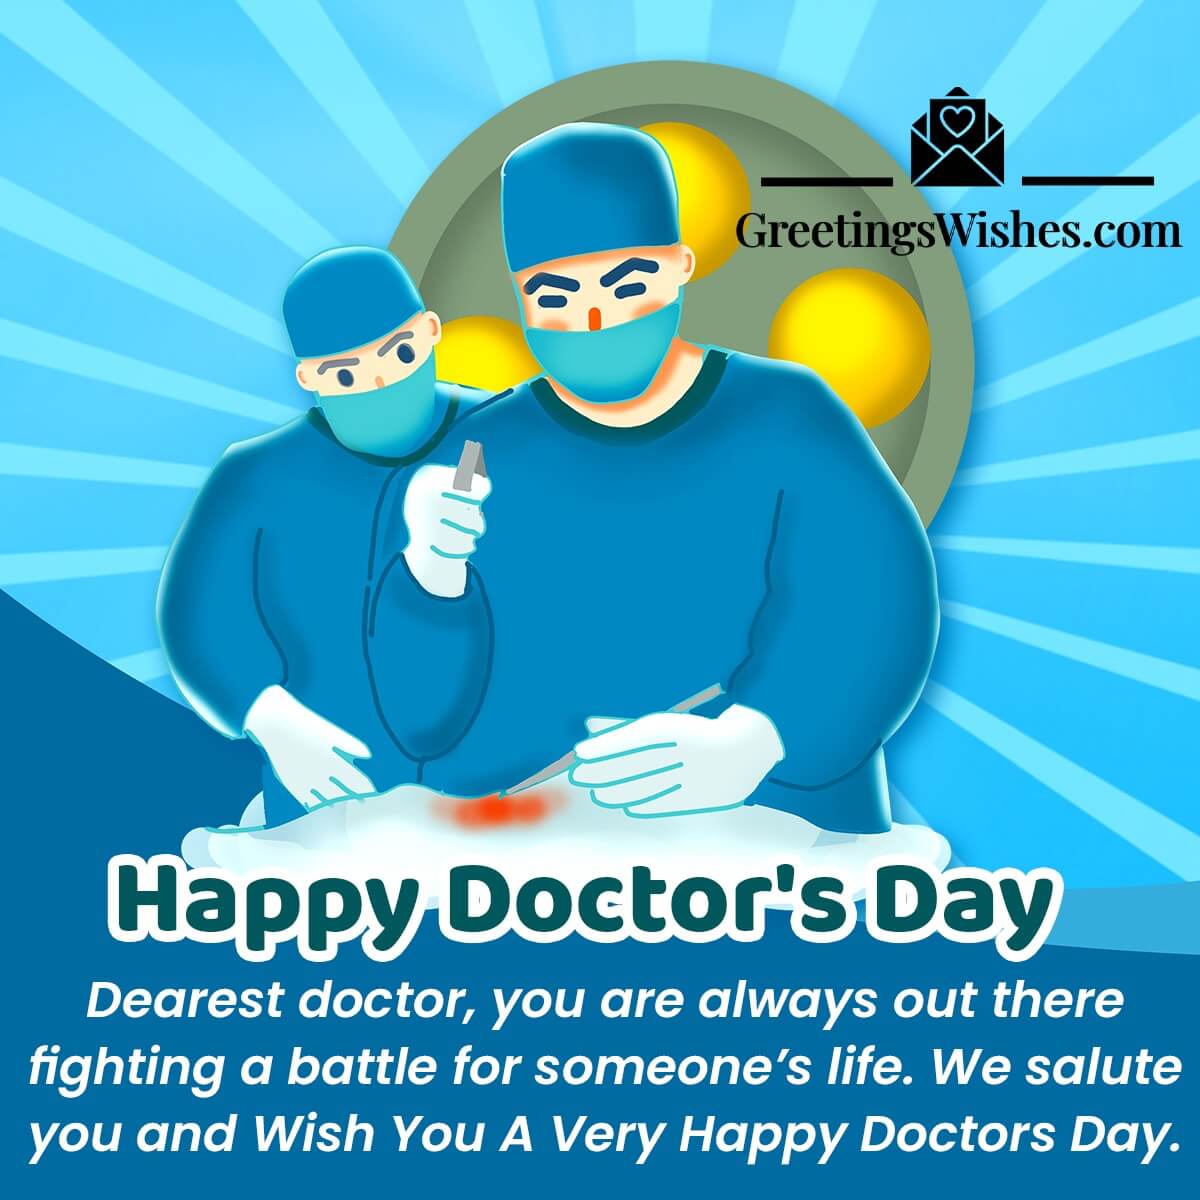 Happy Doctors’ Day Message